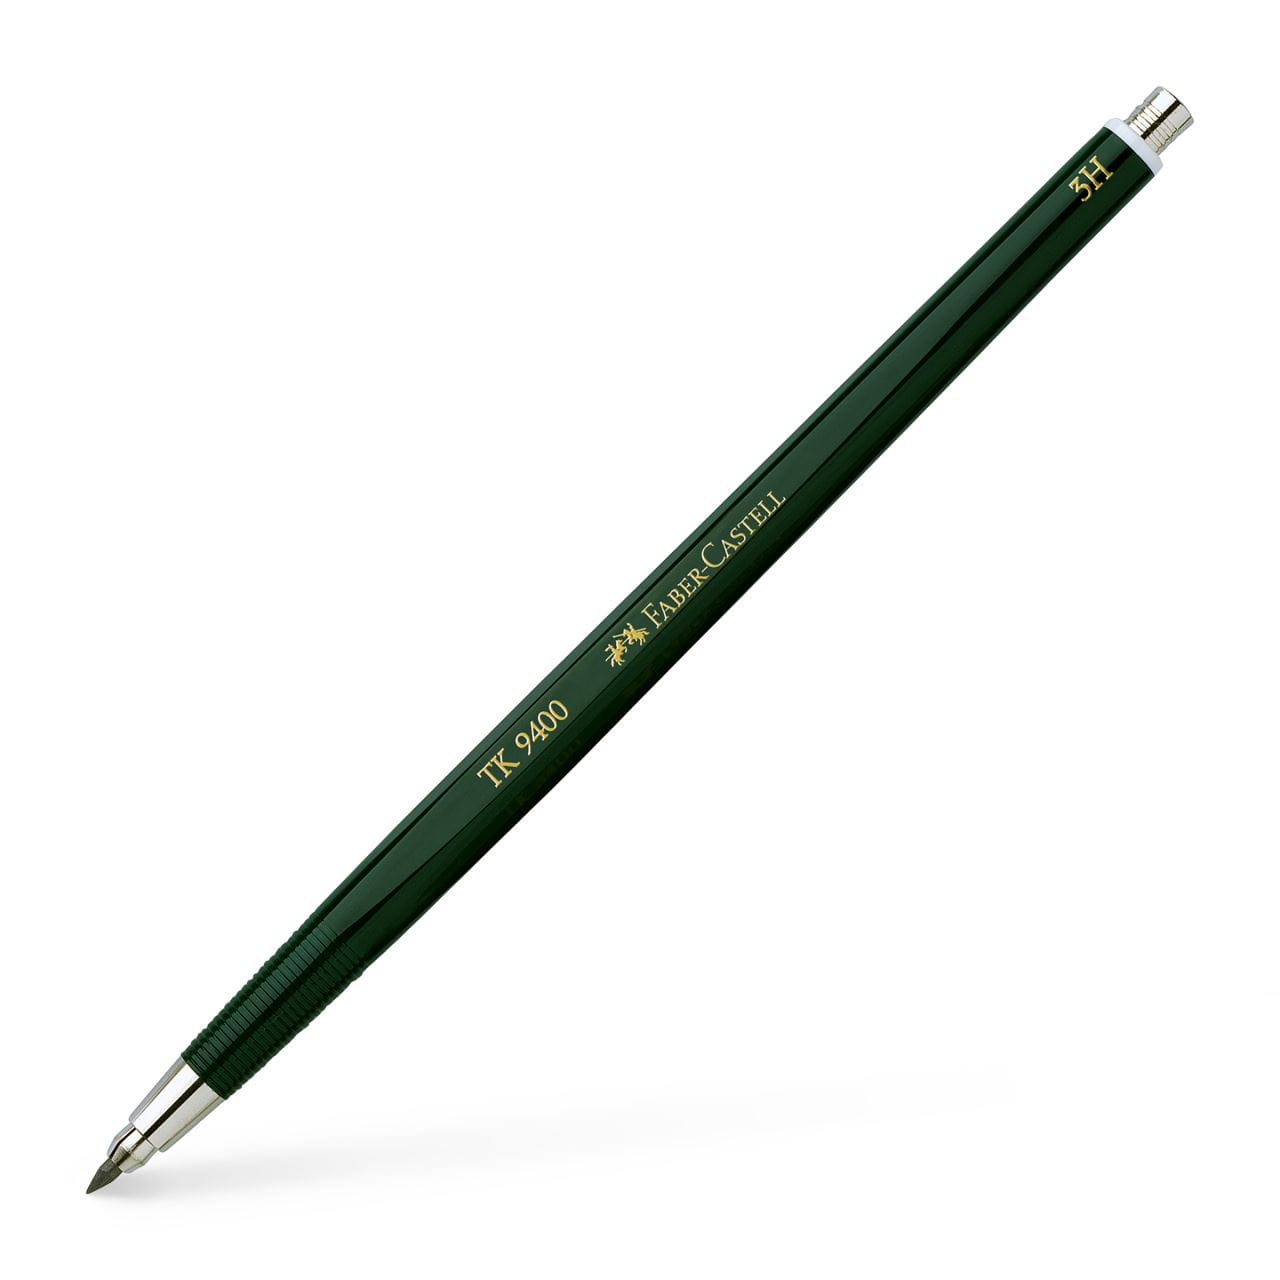 Faber-Castell - TK 9400 clutch pencil, 3H, Ø 2 mm